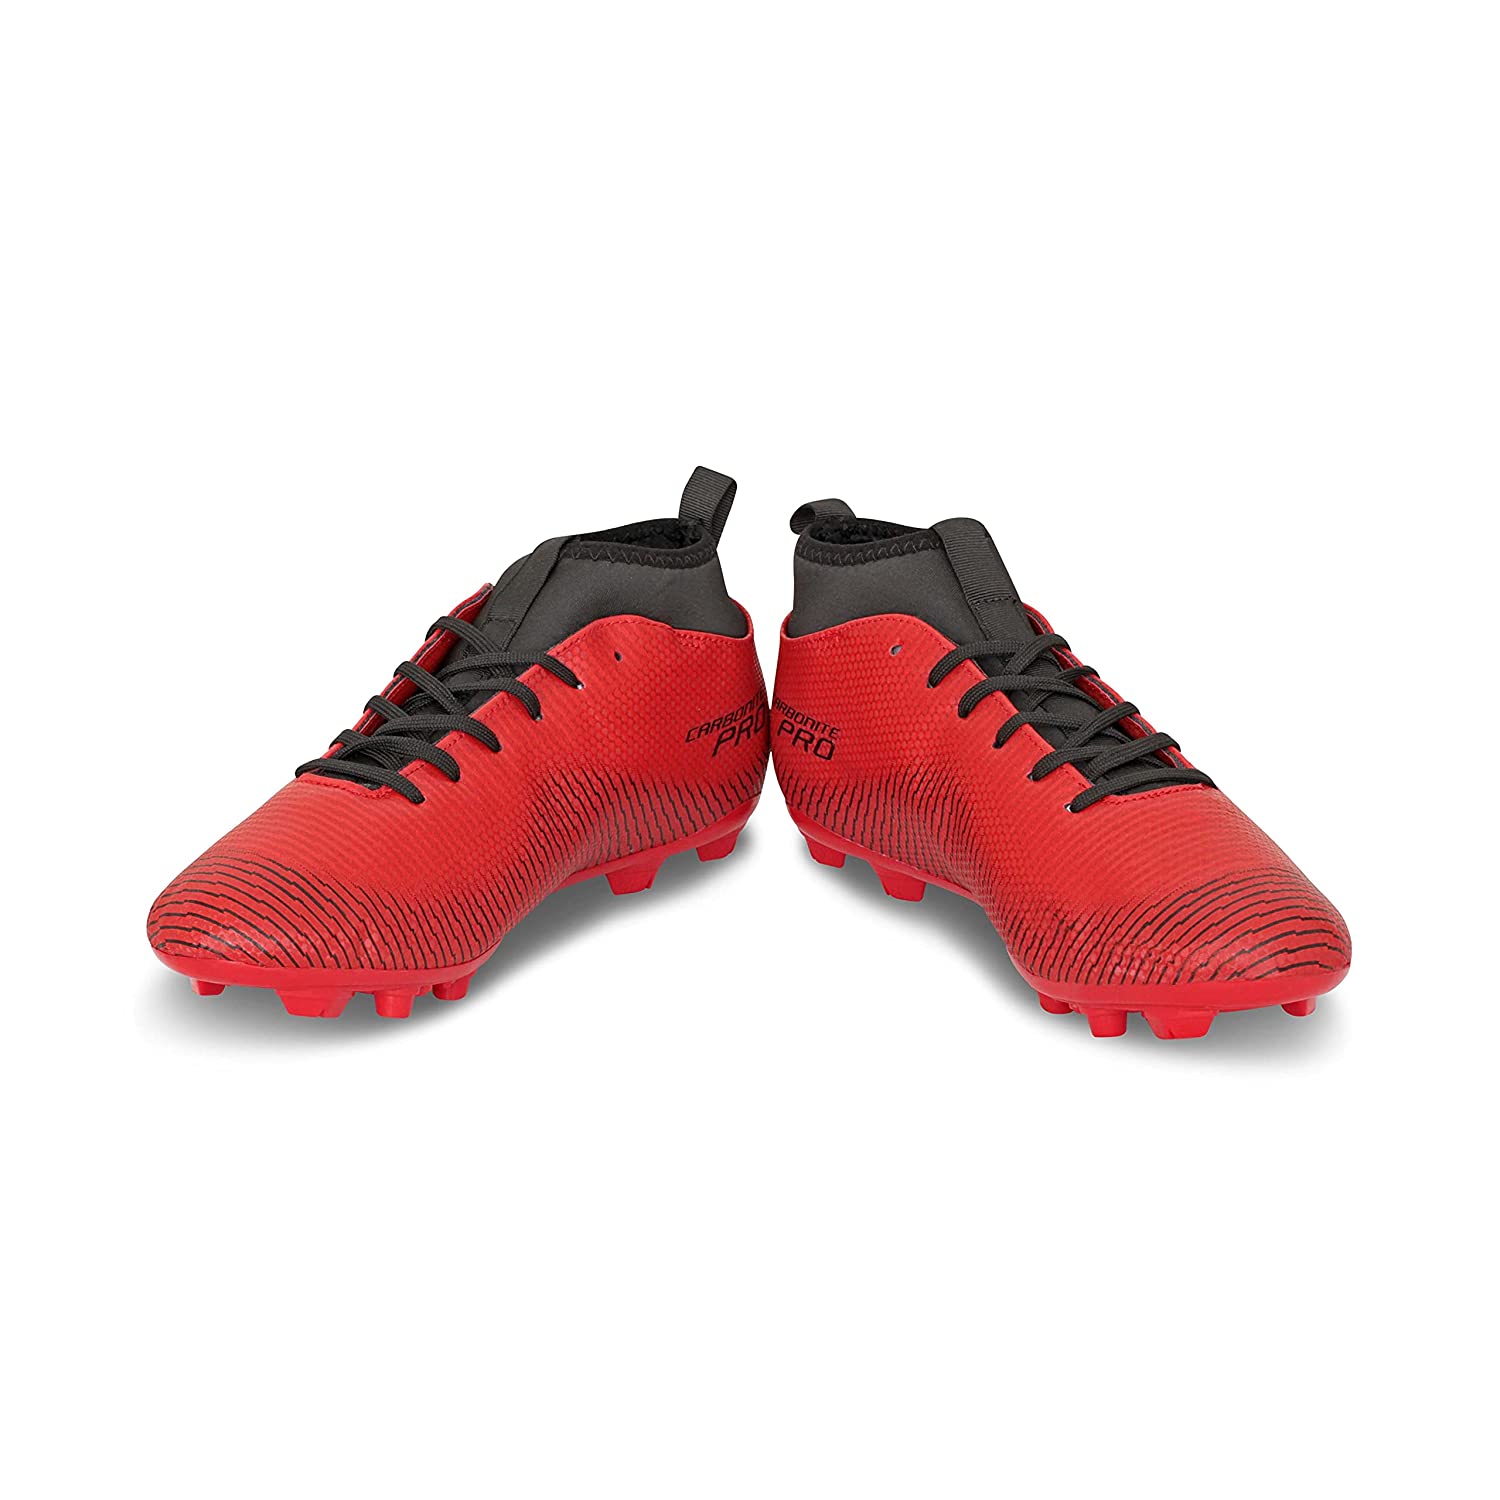 Nivia CarbonitePro 4.0 Football Shoes For Men - Best Price online Prokicksports.com